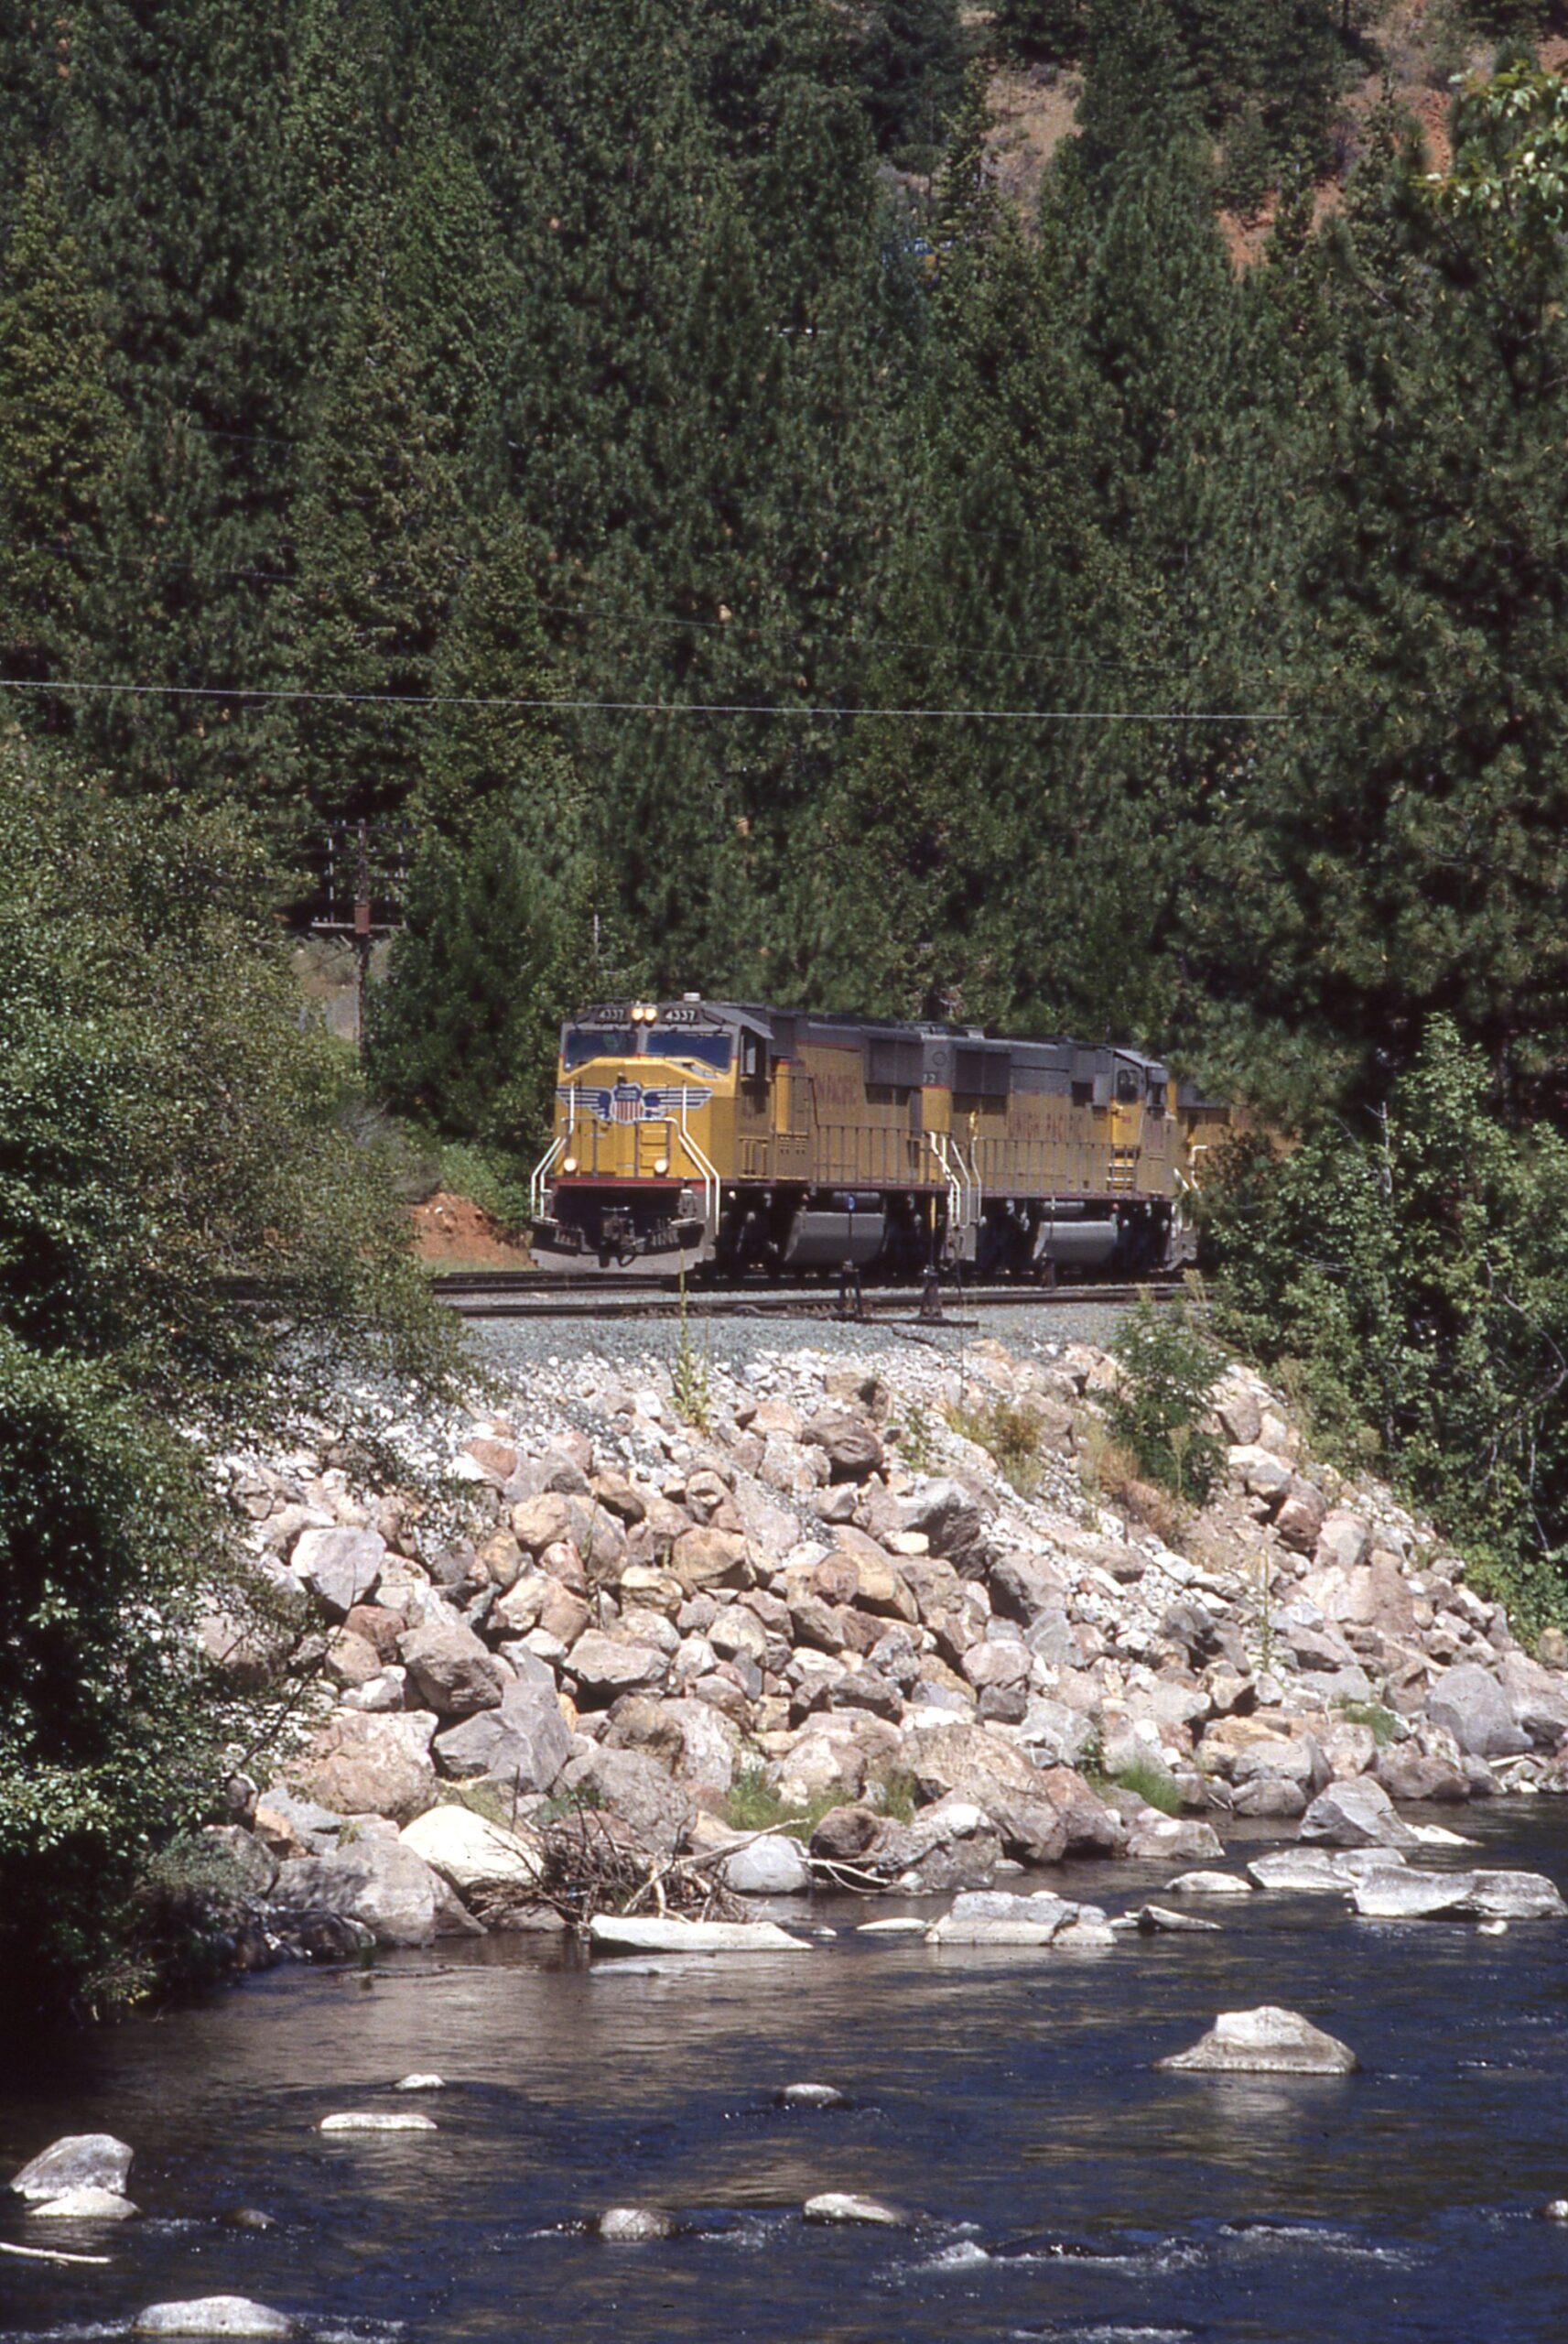 Union Pacific | Dunsmiur, California | EMD Class SD70m #4337, SD60m #2472, SD70m #4212 diesel-electric locomotive | July 30, 2001 | Dick Flock photograph | Richard Prince Colelction